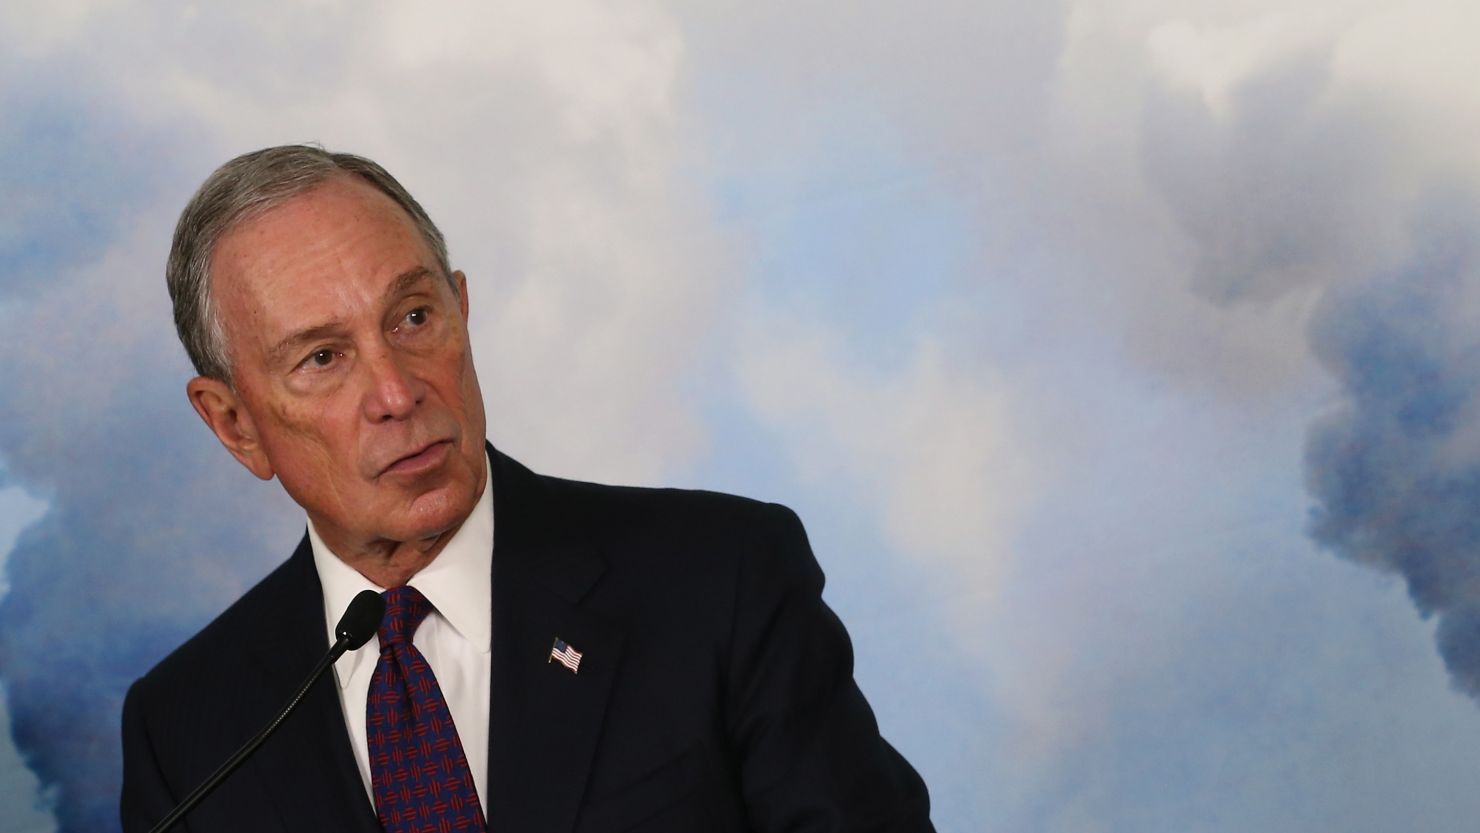 Former New York City Mayor Michael Bloomberg speaks at the Sierra Club April 8, 2015 in Washington, DC.